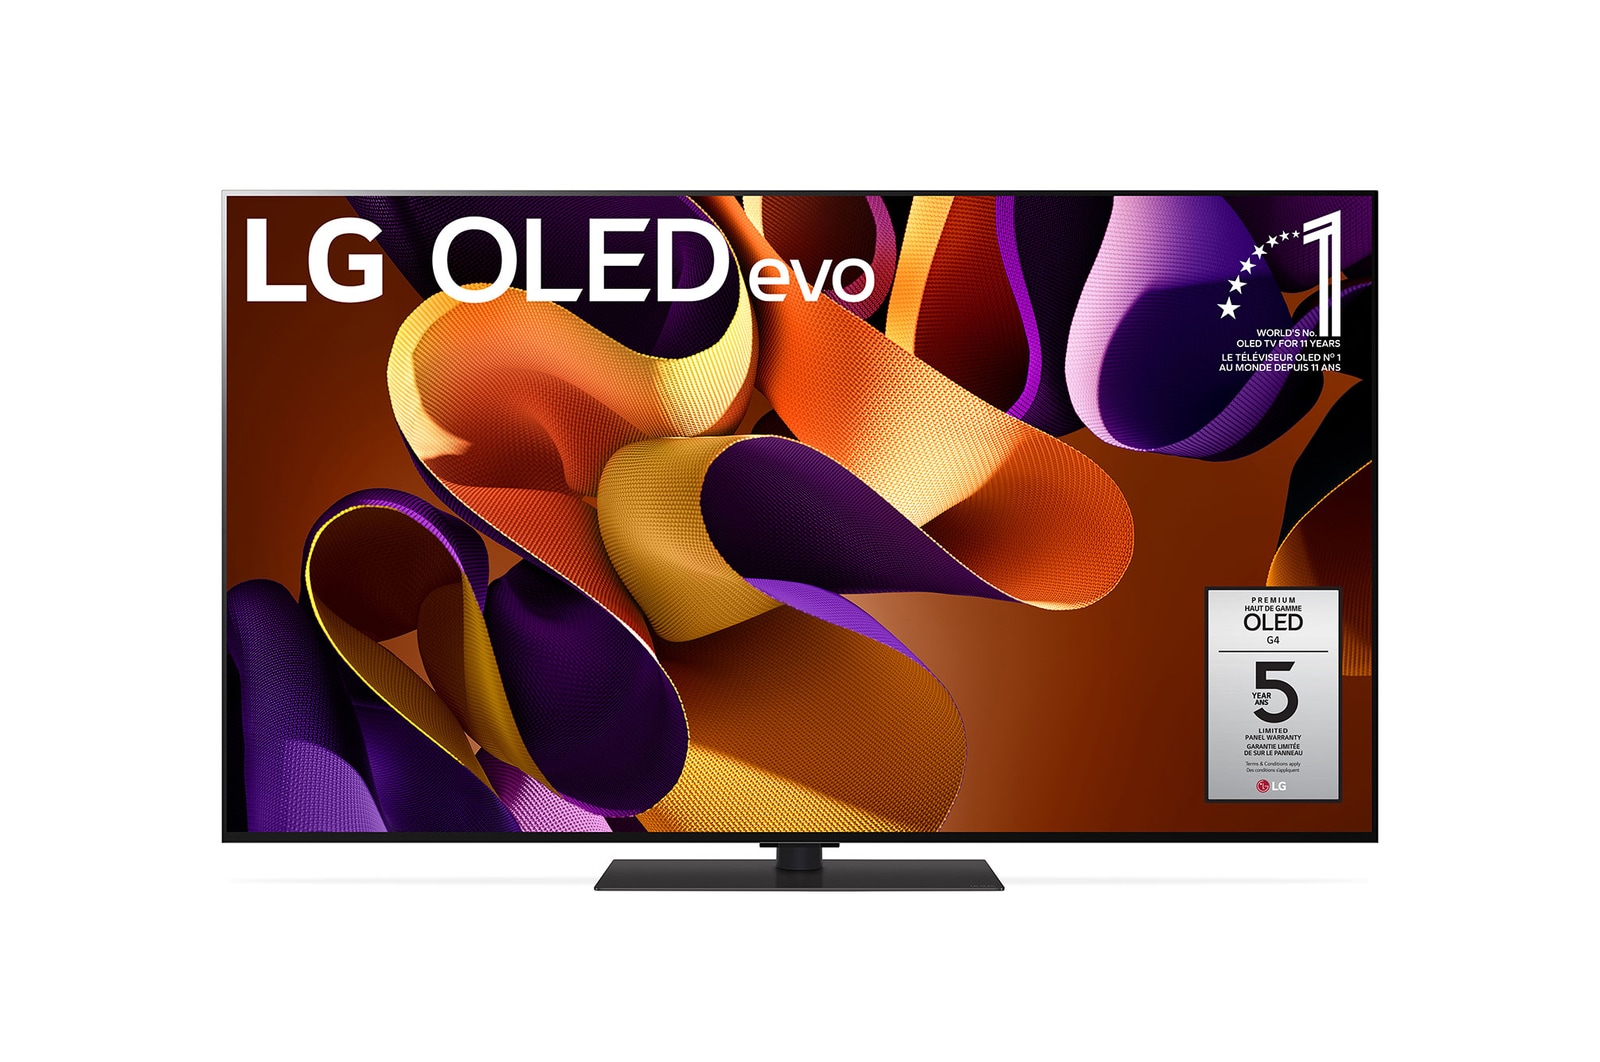 LG OLED evo G4 TV, OLED55G4SUB, with 11 Years of world number 1 OLED Emblem and 5-Year Panel Warranty logo on screen